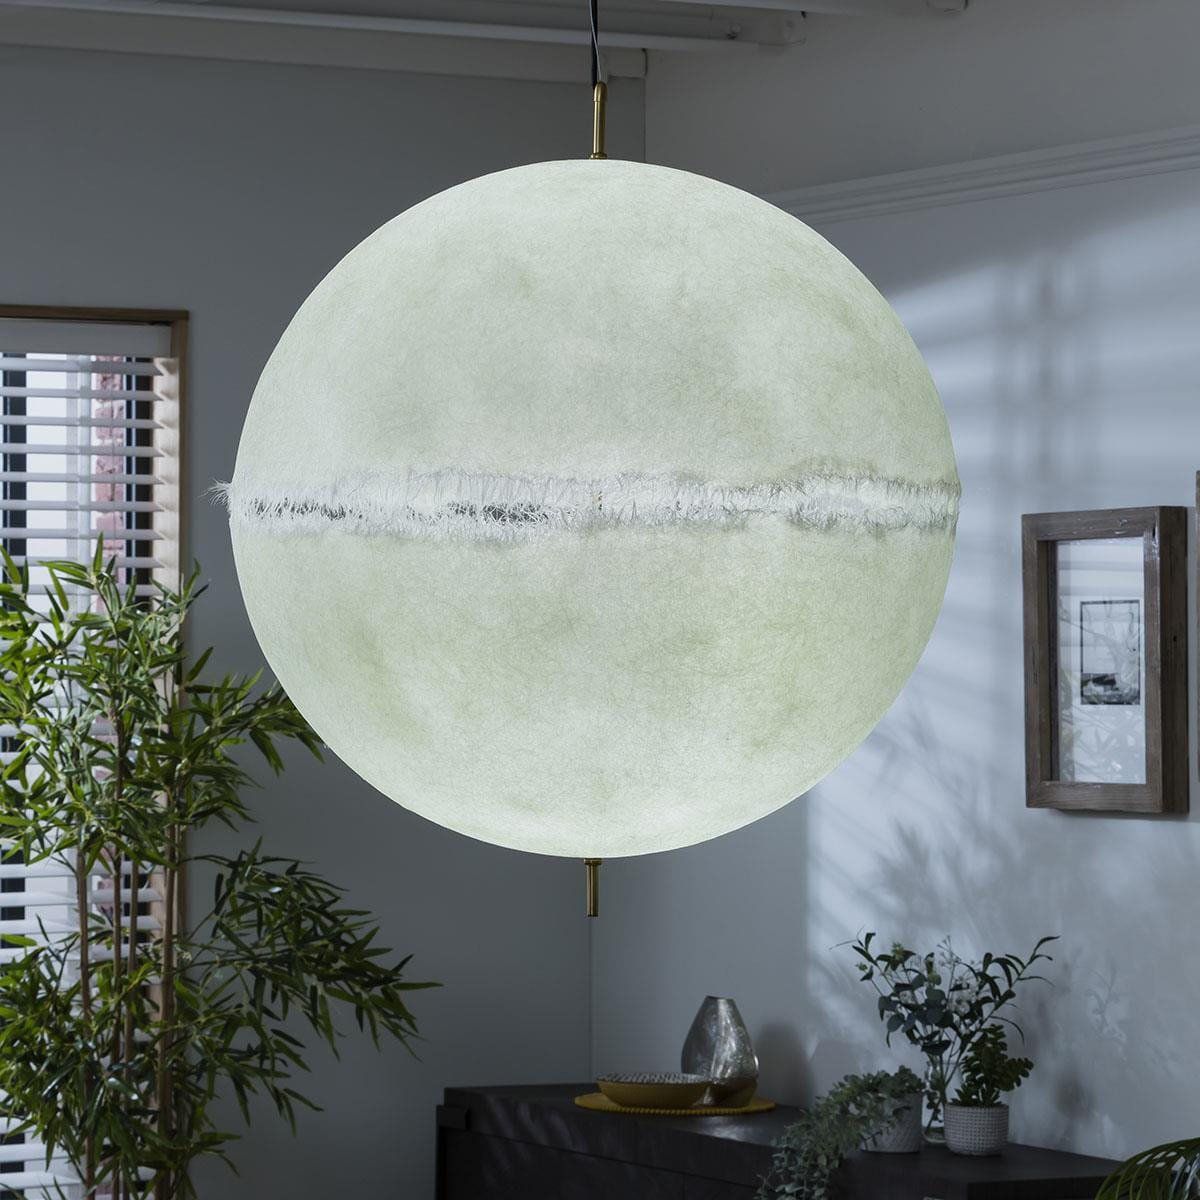 Quatropi Modern White Contemporary Moon Ball Ceiling Light Pendant - Large 70cm